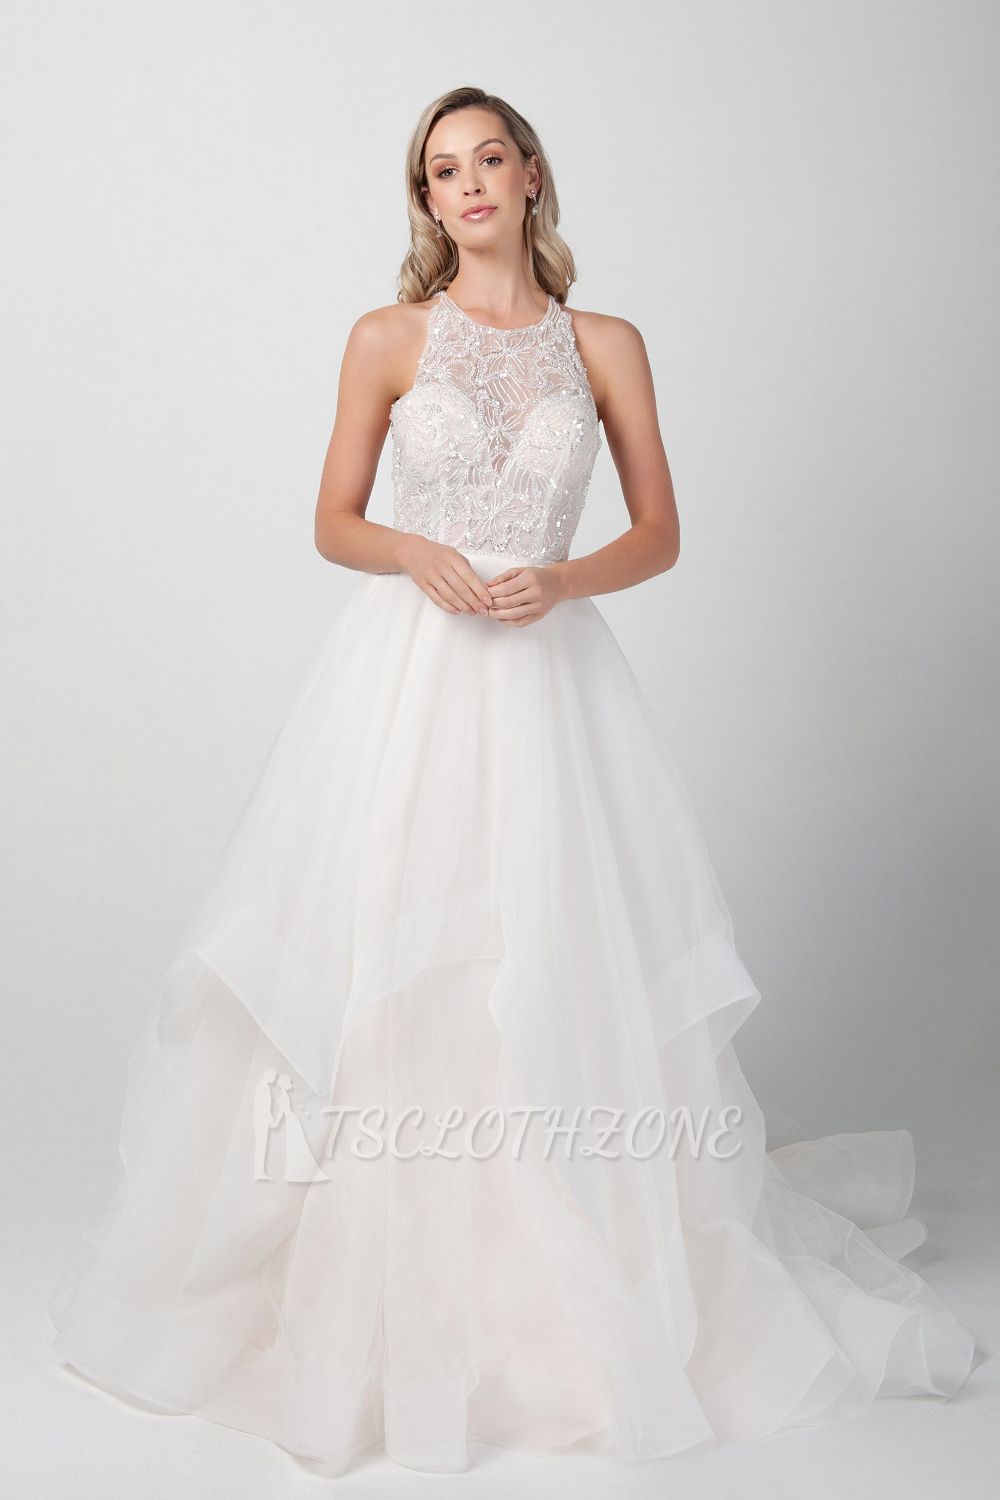 Crystal Beaded Sparkling Sequins Tulle Lace Fluffy Romantic Vintage Wedding Dress Wedding Custom